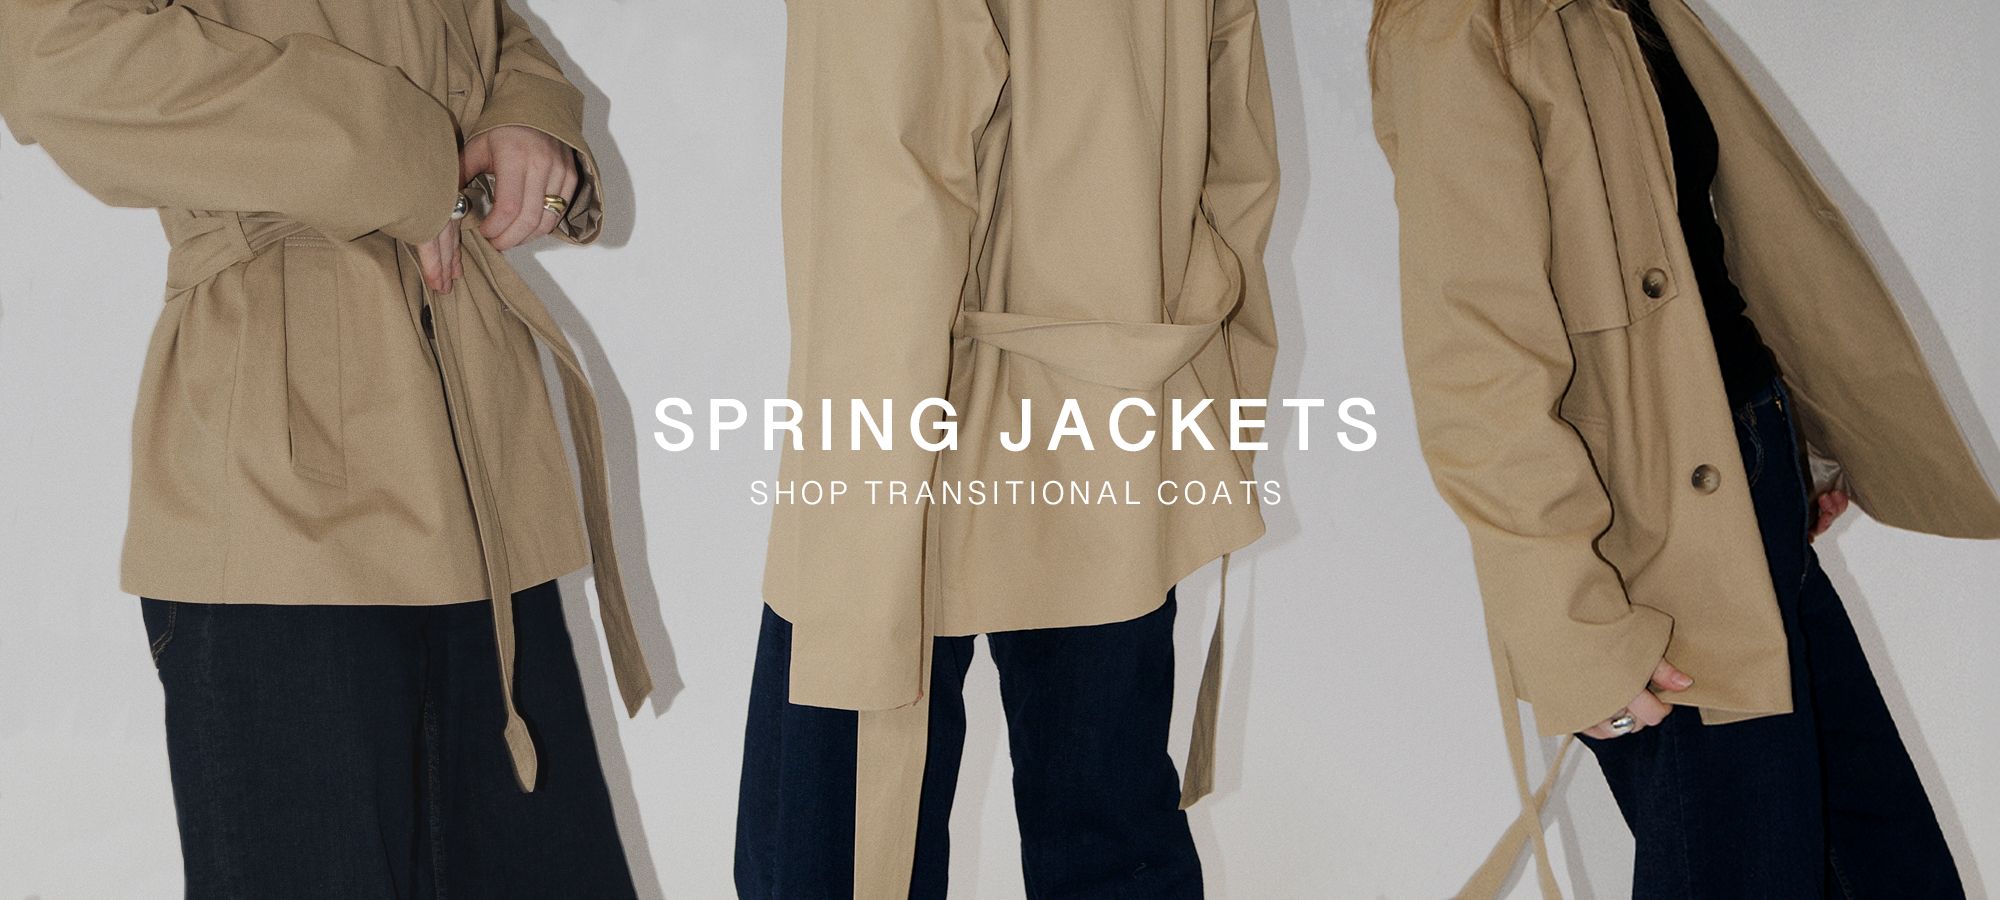 Shop Spring Jackets at Byflou.com